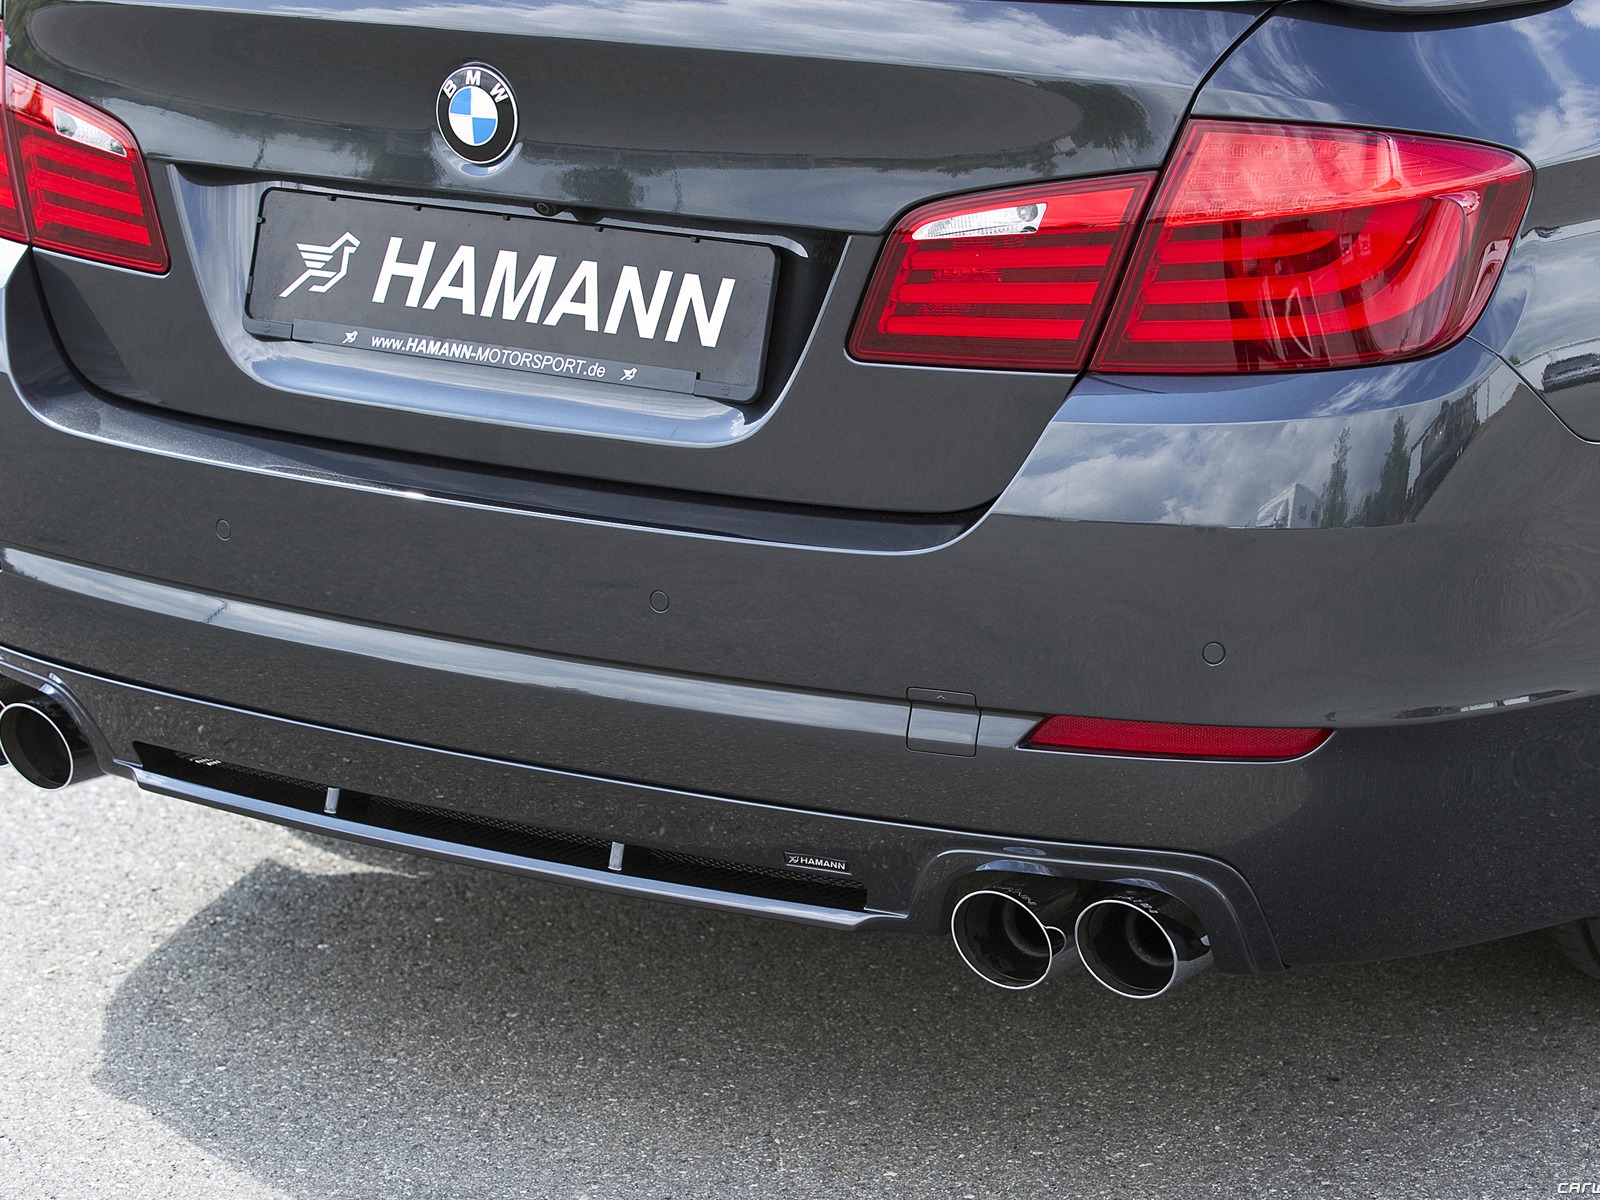 Hamann BMW 5-series F10 - 2010 寶馬 #18 - 1600x1200